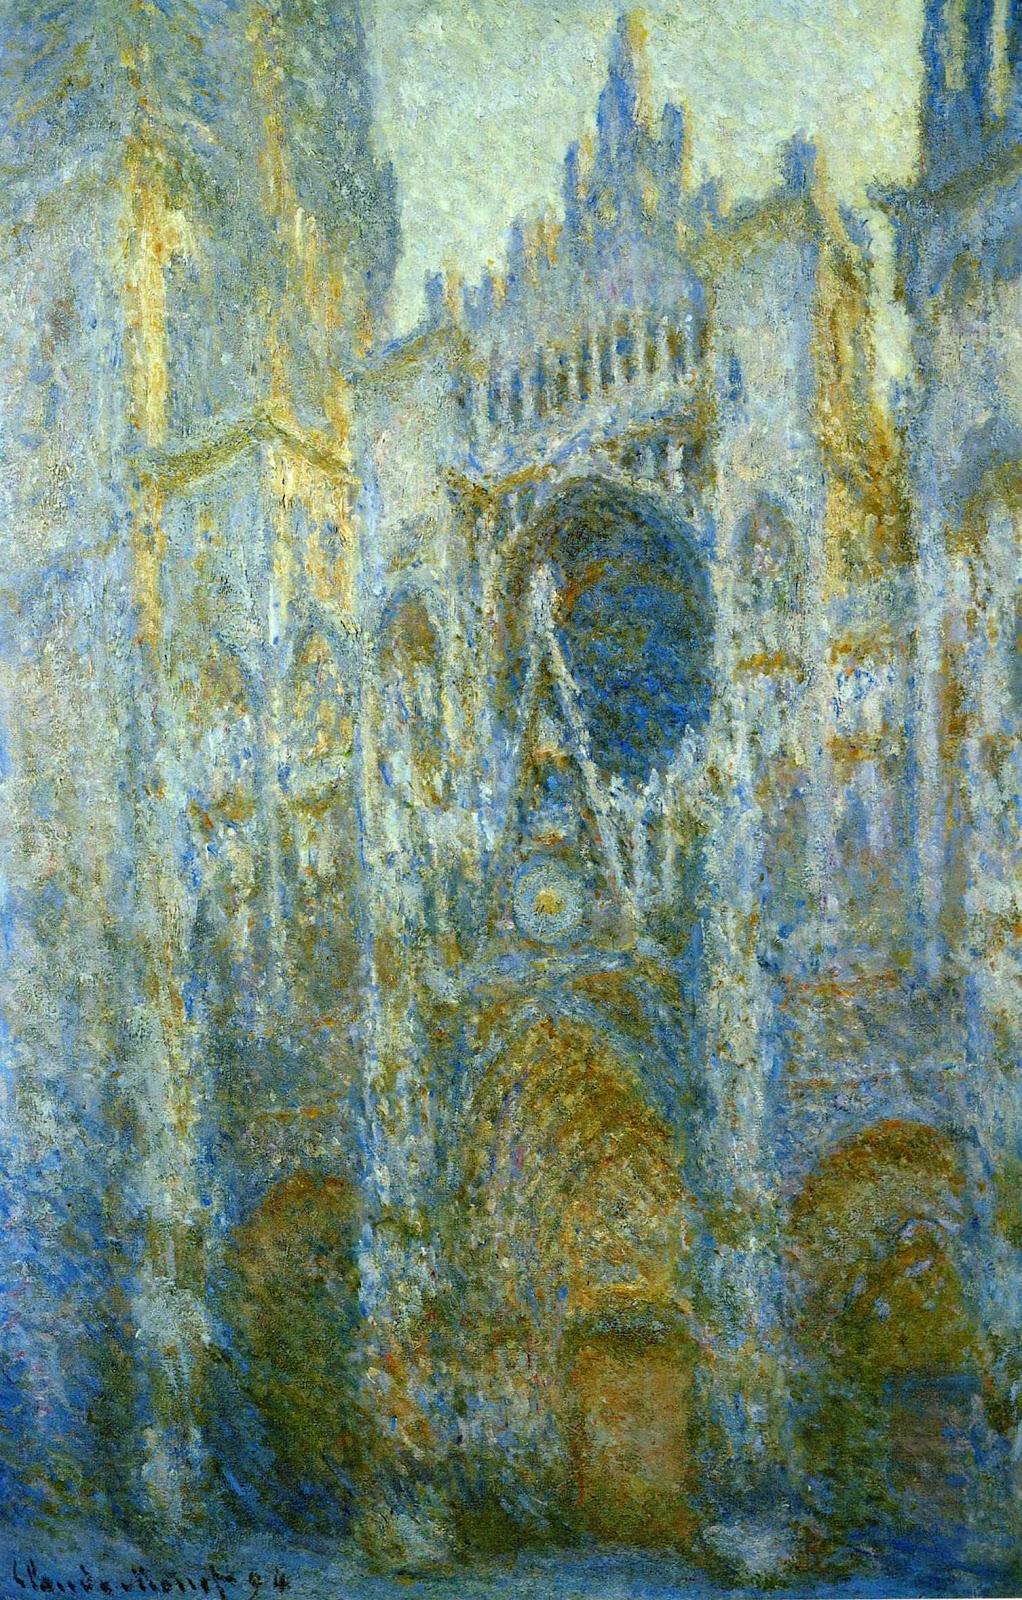 Claude+Monet-1840-1926 (627).jpg